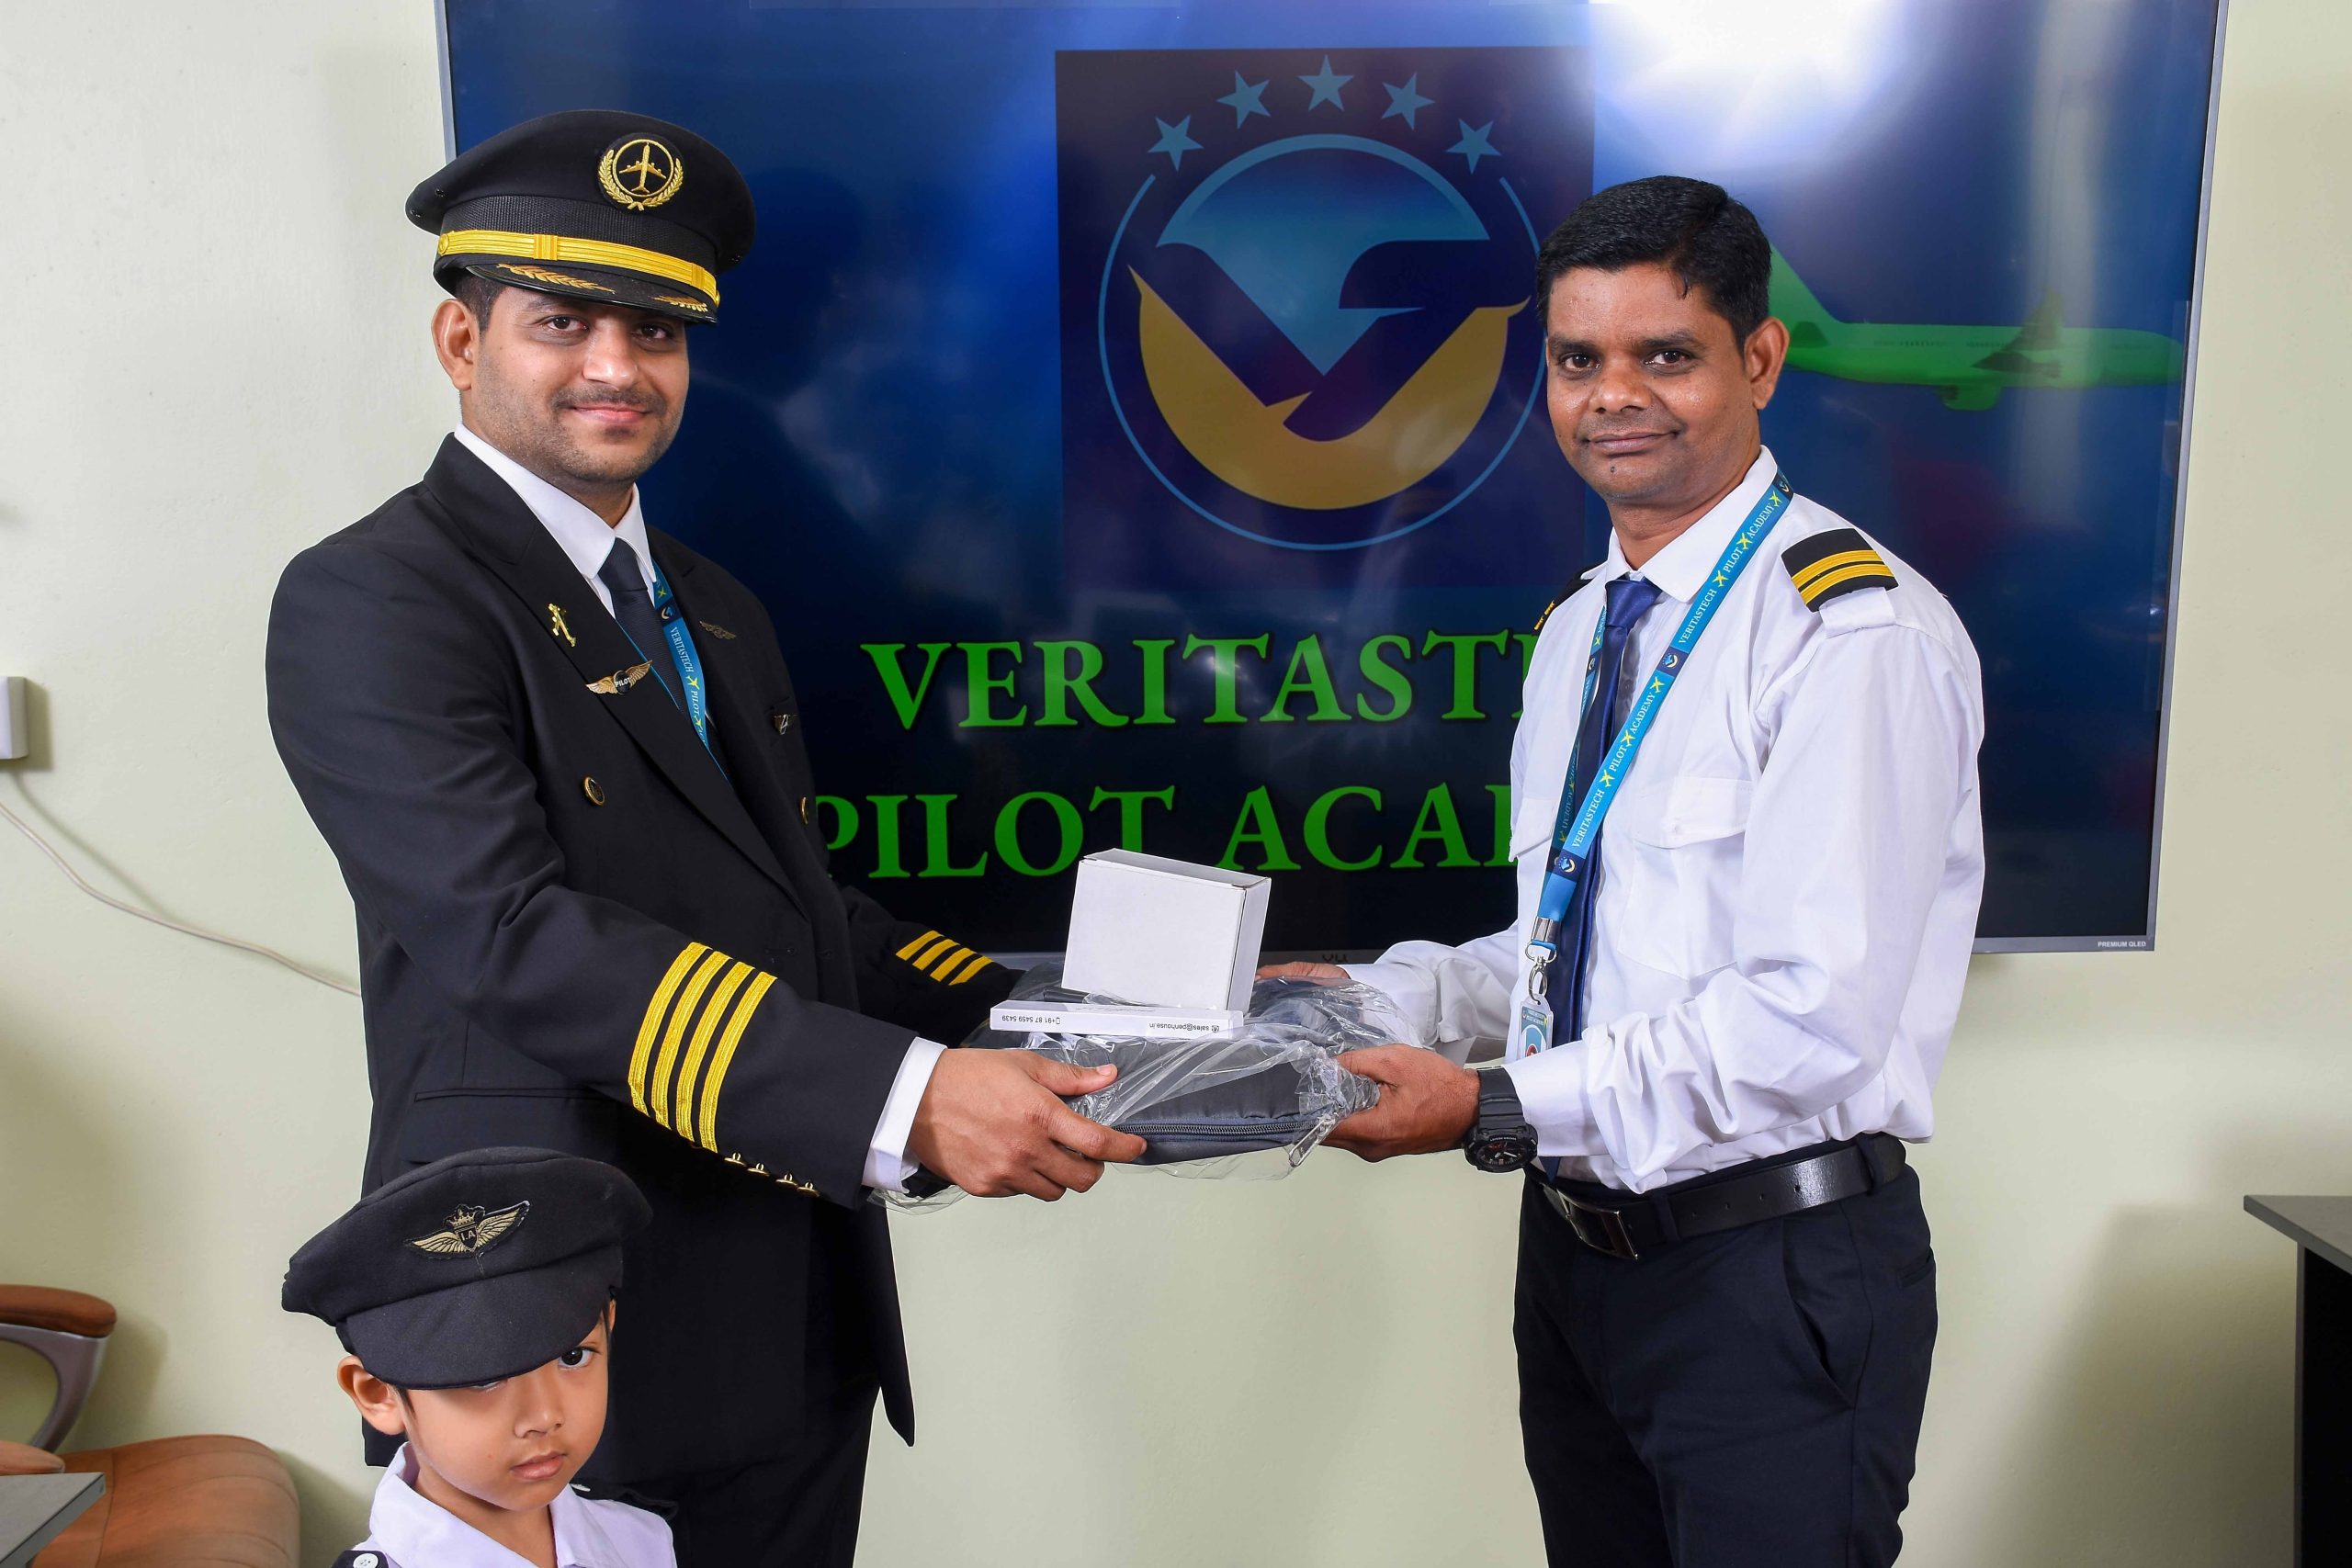 Veritastech Pilot Academy programs